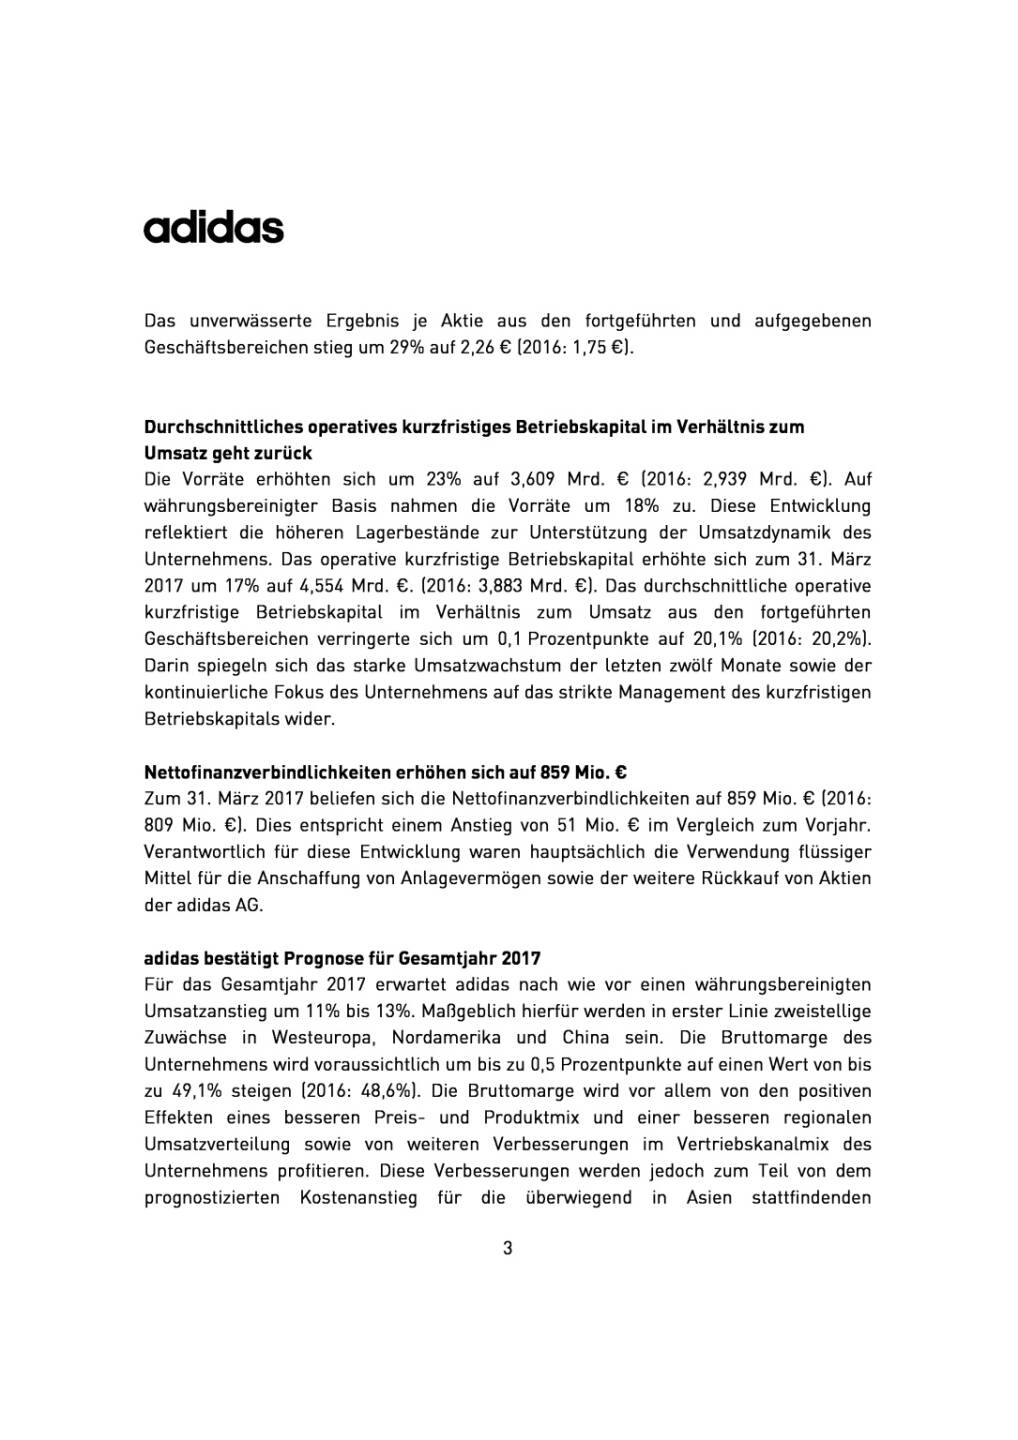 adidas: Ergebnisse Q1/2017, Seite 3/6, komplettes Dokument unter http://boerse-social.com/static/uploads/file_2236_adidas_ergebnisse_q12017.pdf